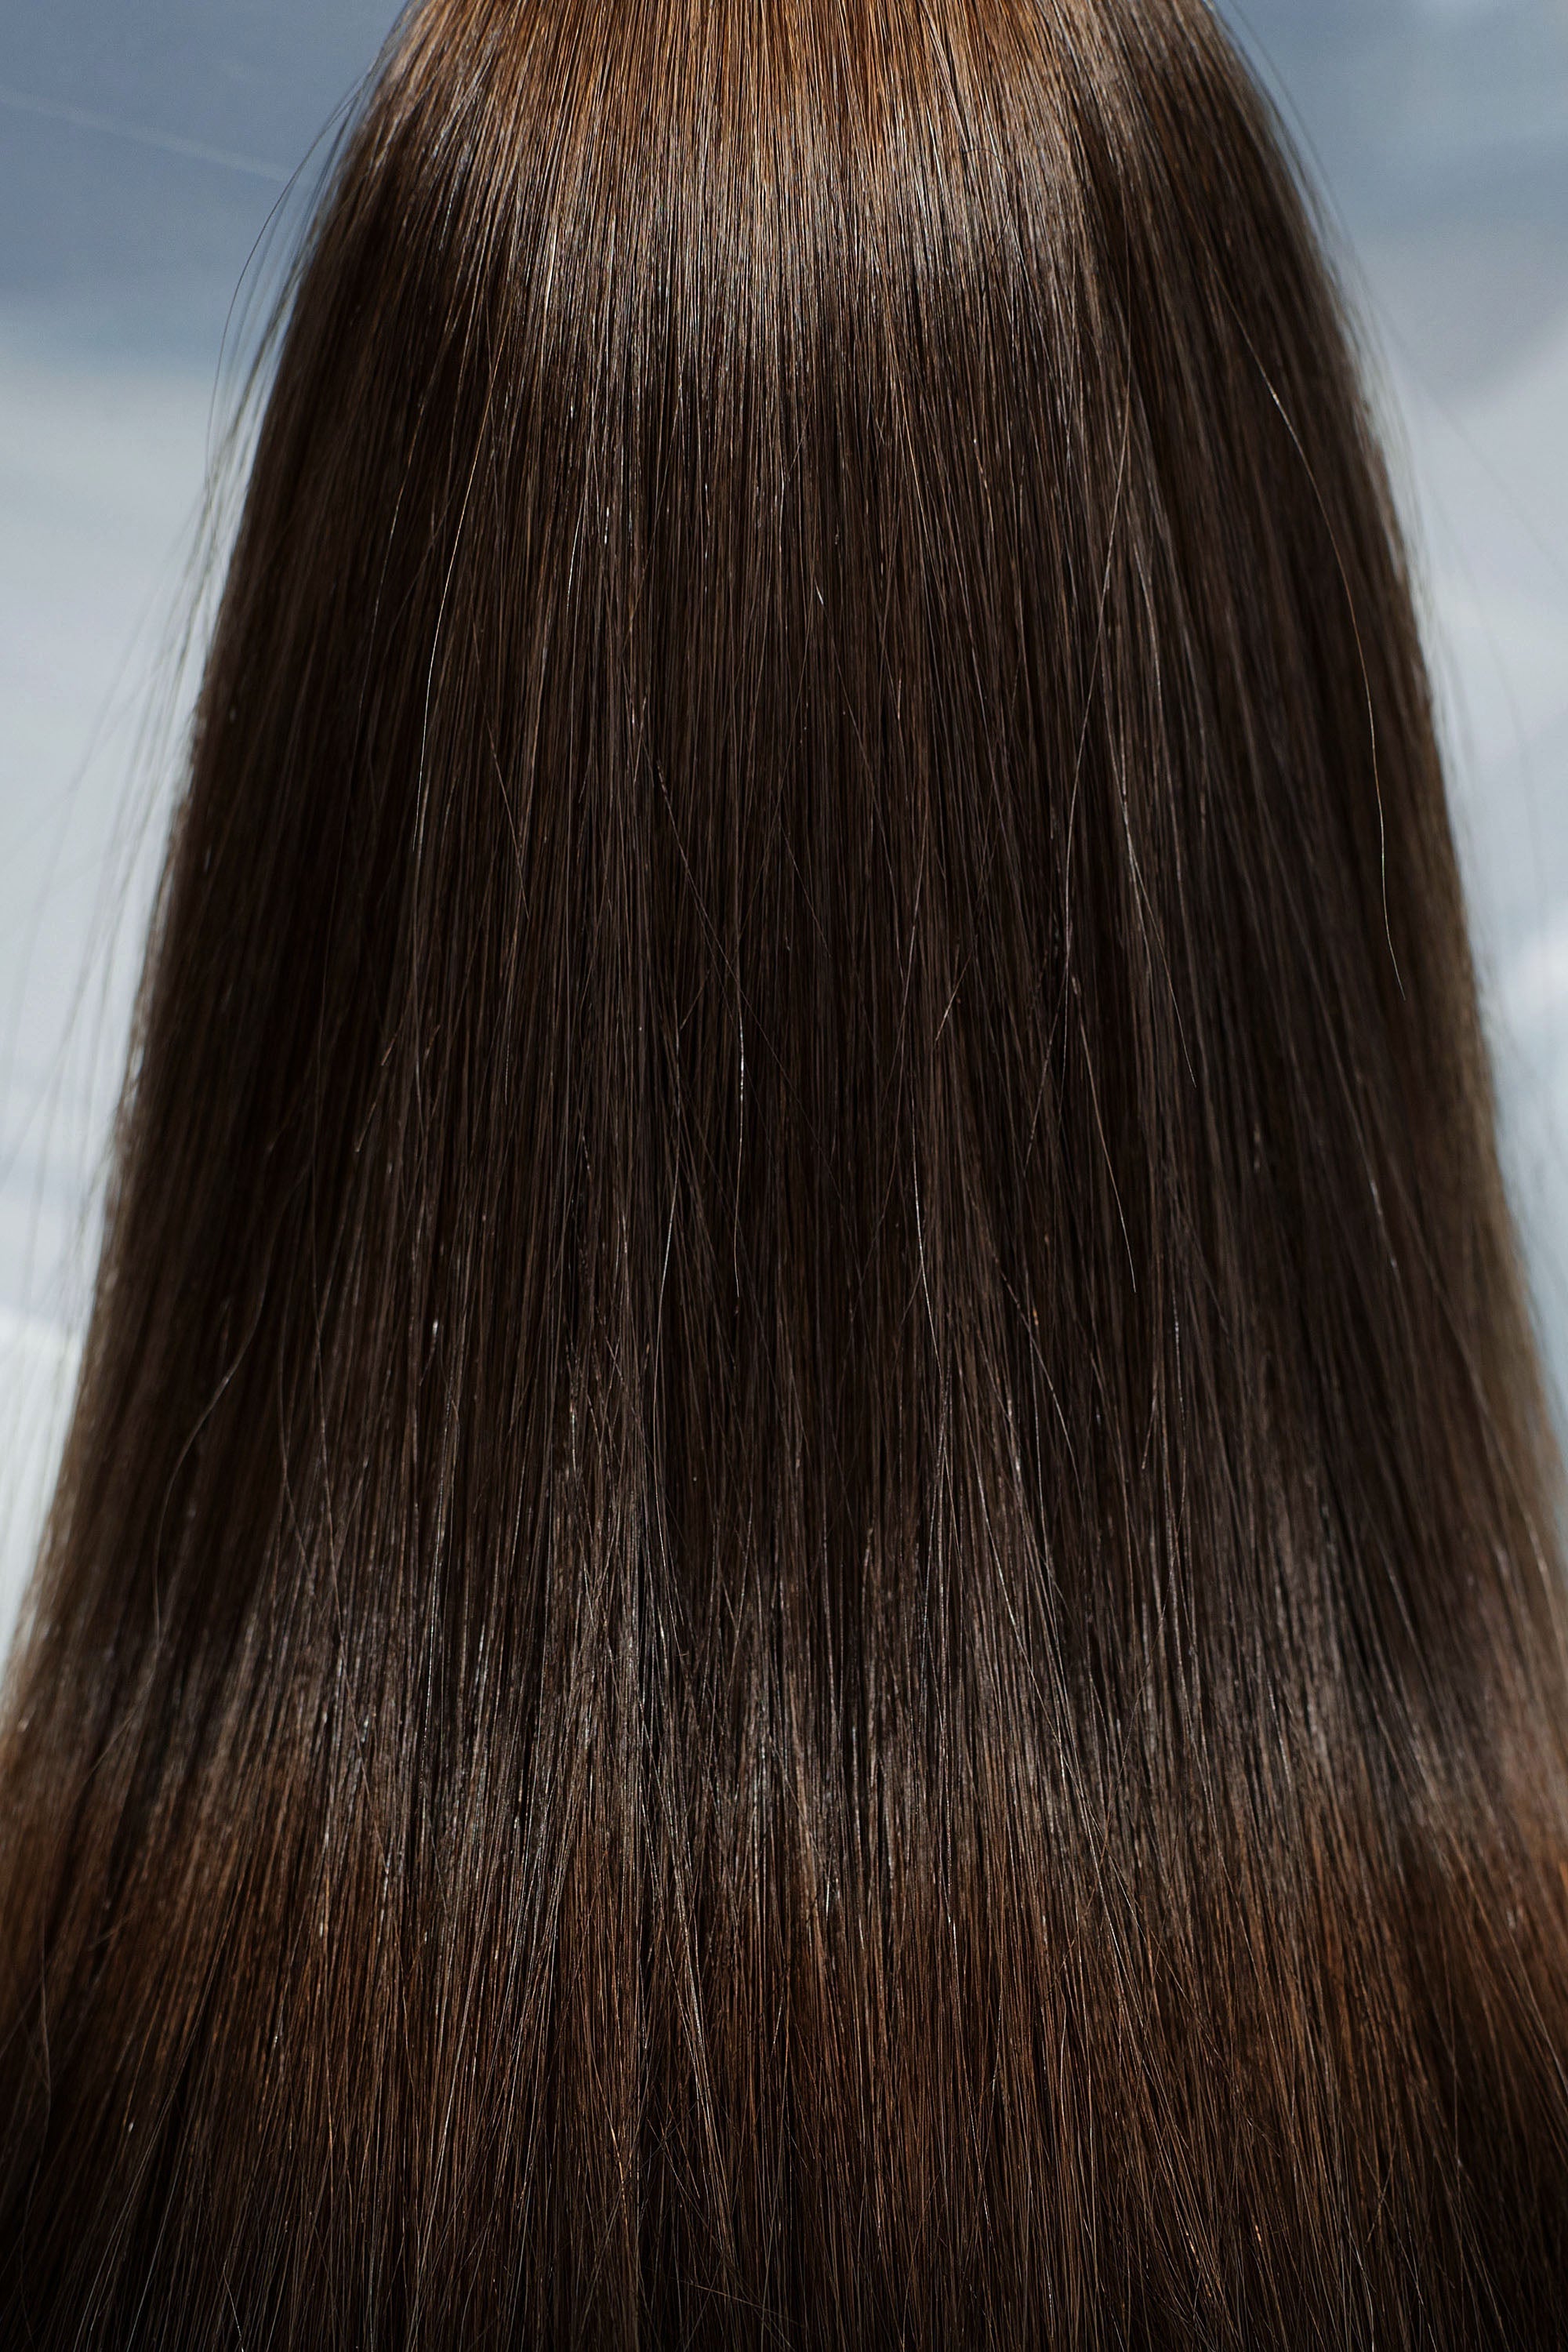 Behair professional Keratin Tip "Premium" 20" (50cm) Natural Straight Light Brown #4 - 25g (Micro - 0.5g each pcs) hair extensions